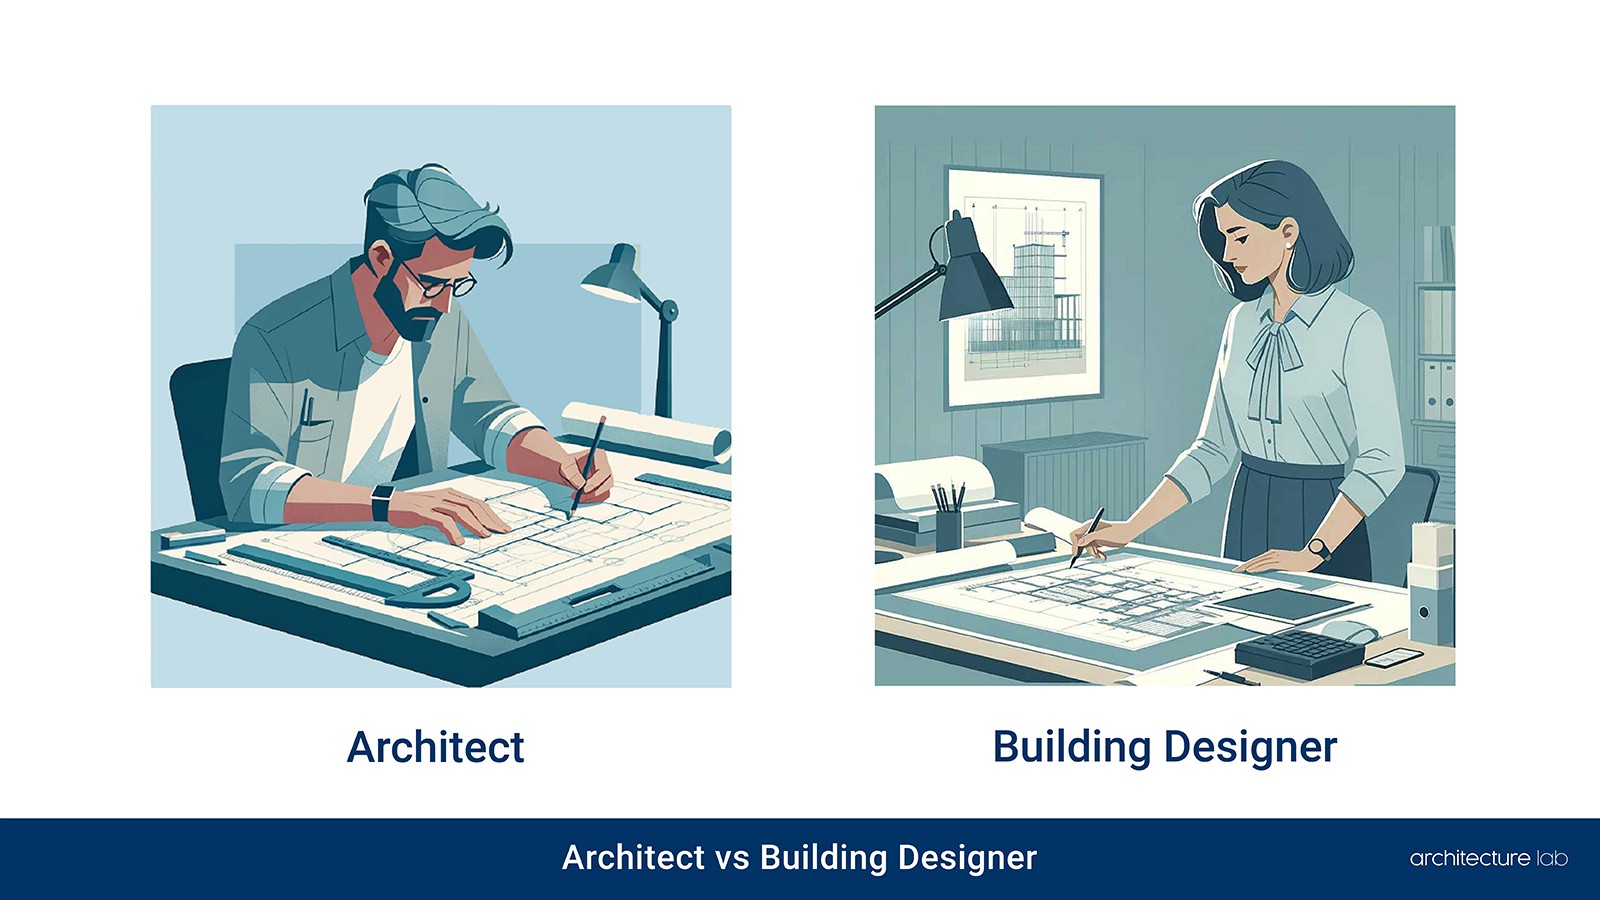 Architect vs. Building designer: differences, similarities, duties, salaries, and education